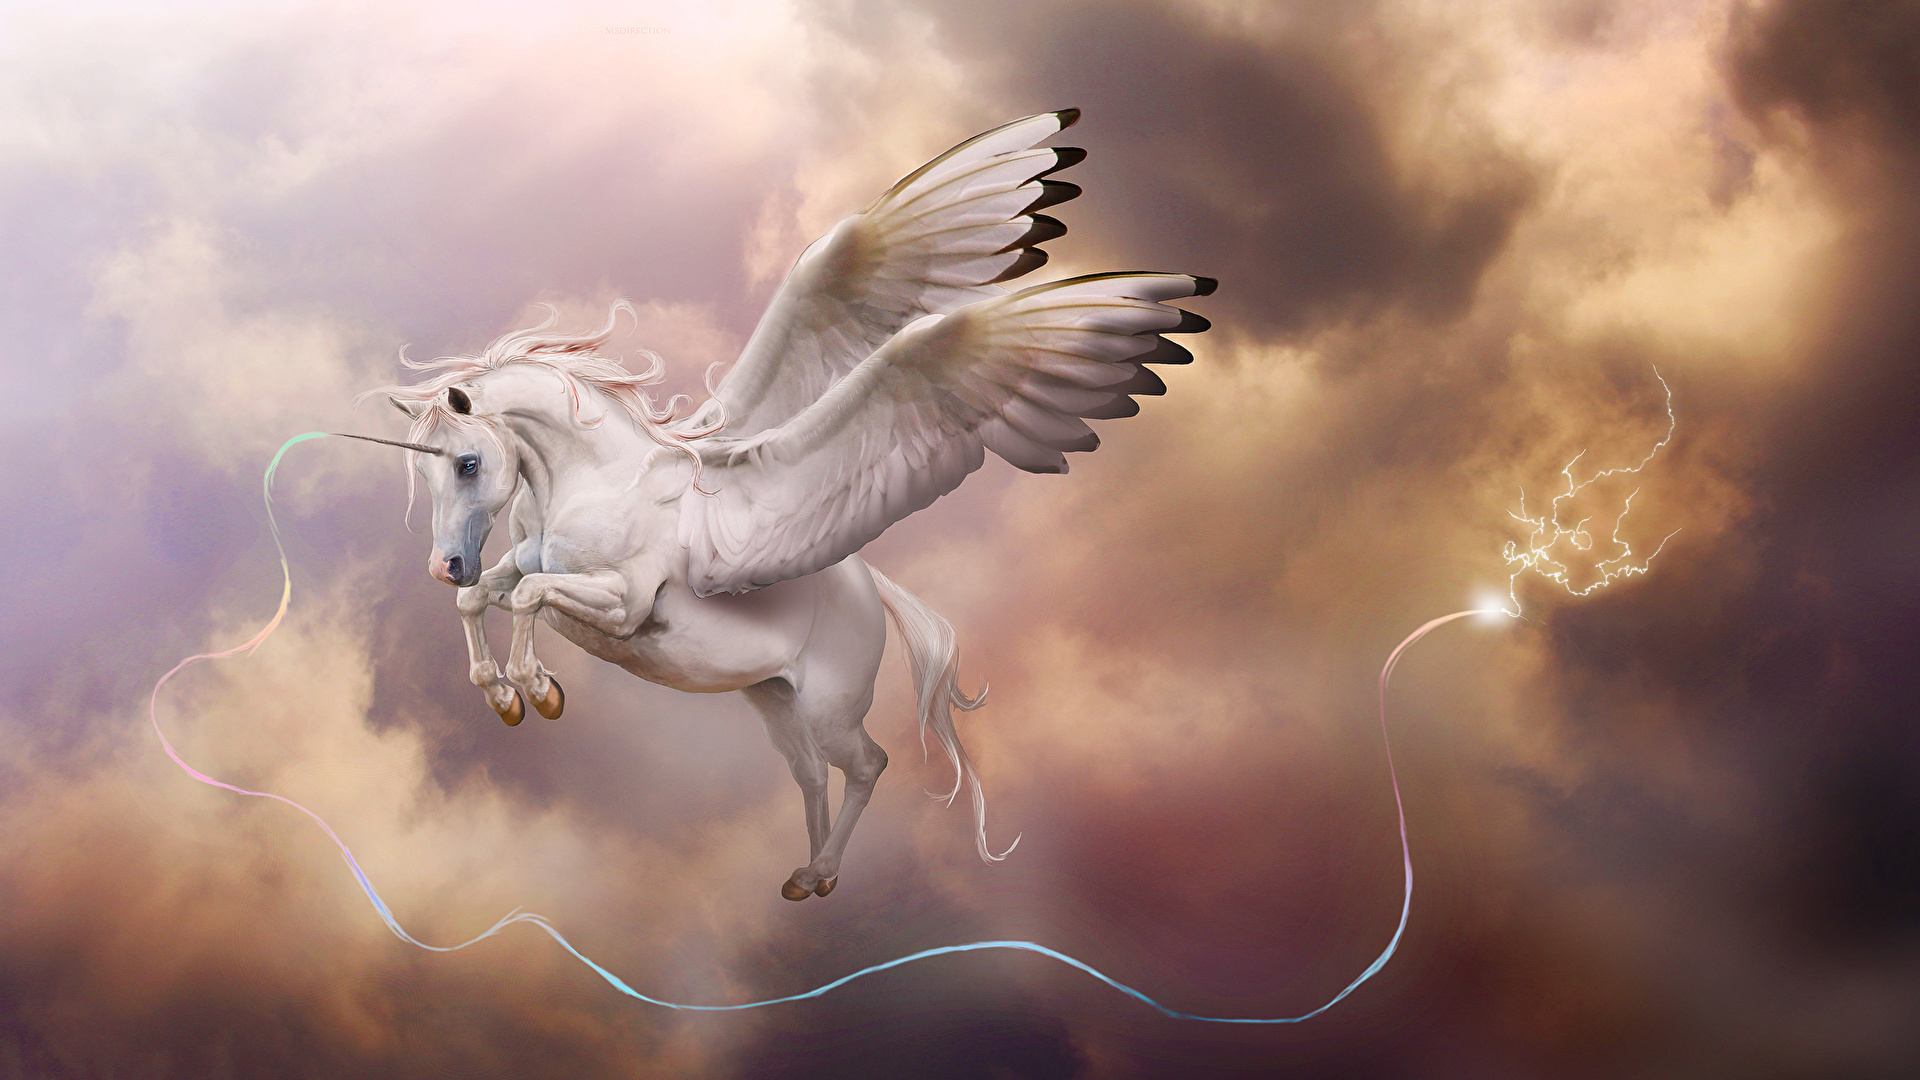 PEGASUS IPHONE WALLPAPER BACKGROUND  Fantasy art illustrations Unicorn  pictures Unicorn and fairies